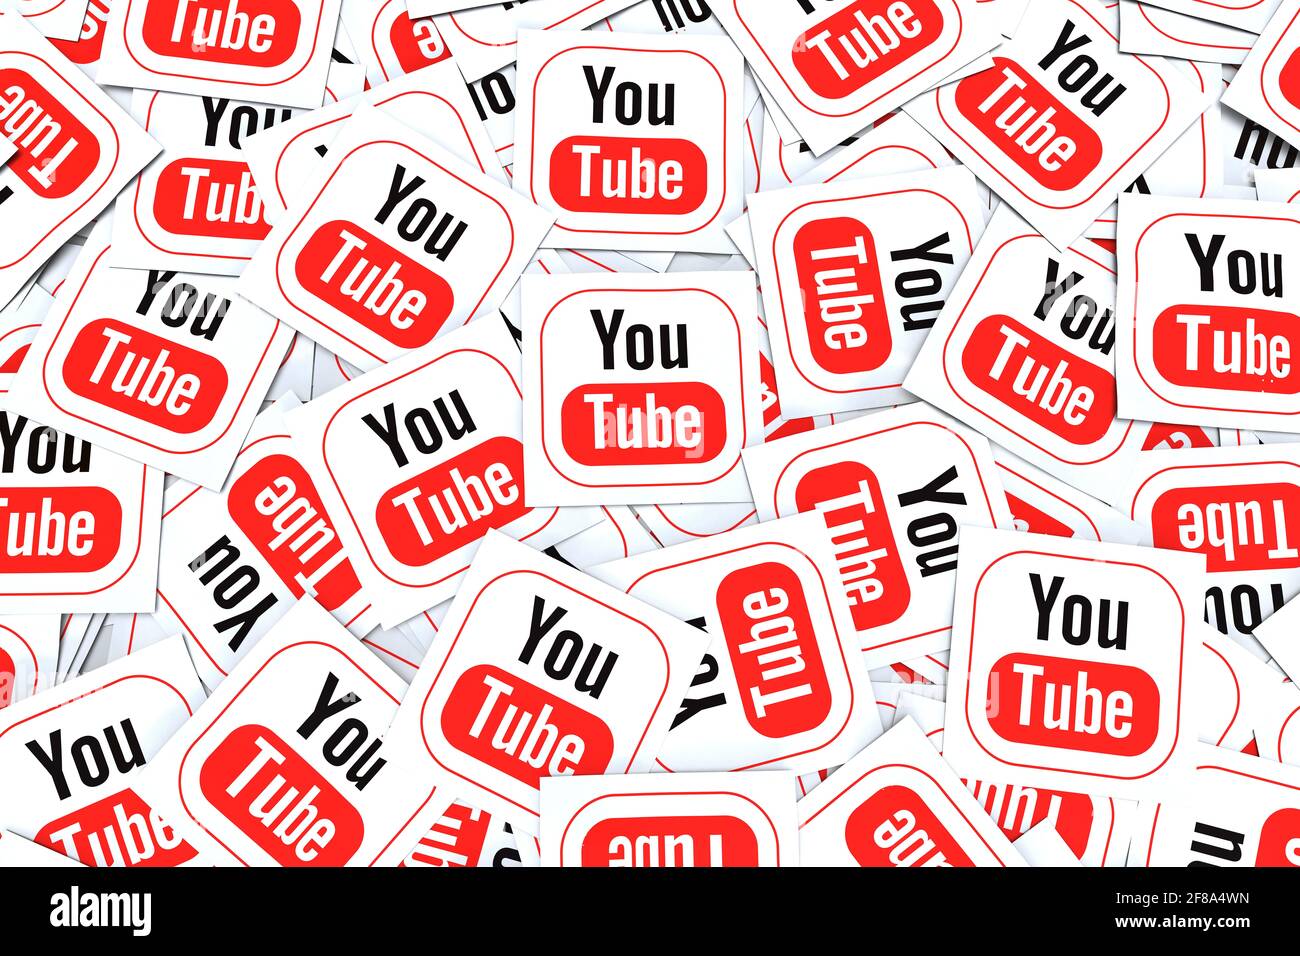 Youtube, Social Media Background Design Stock Photo - Alamy